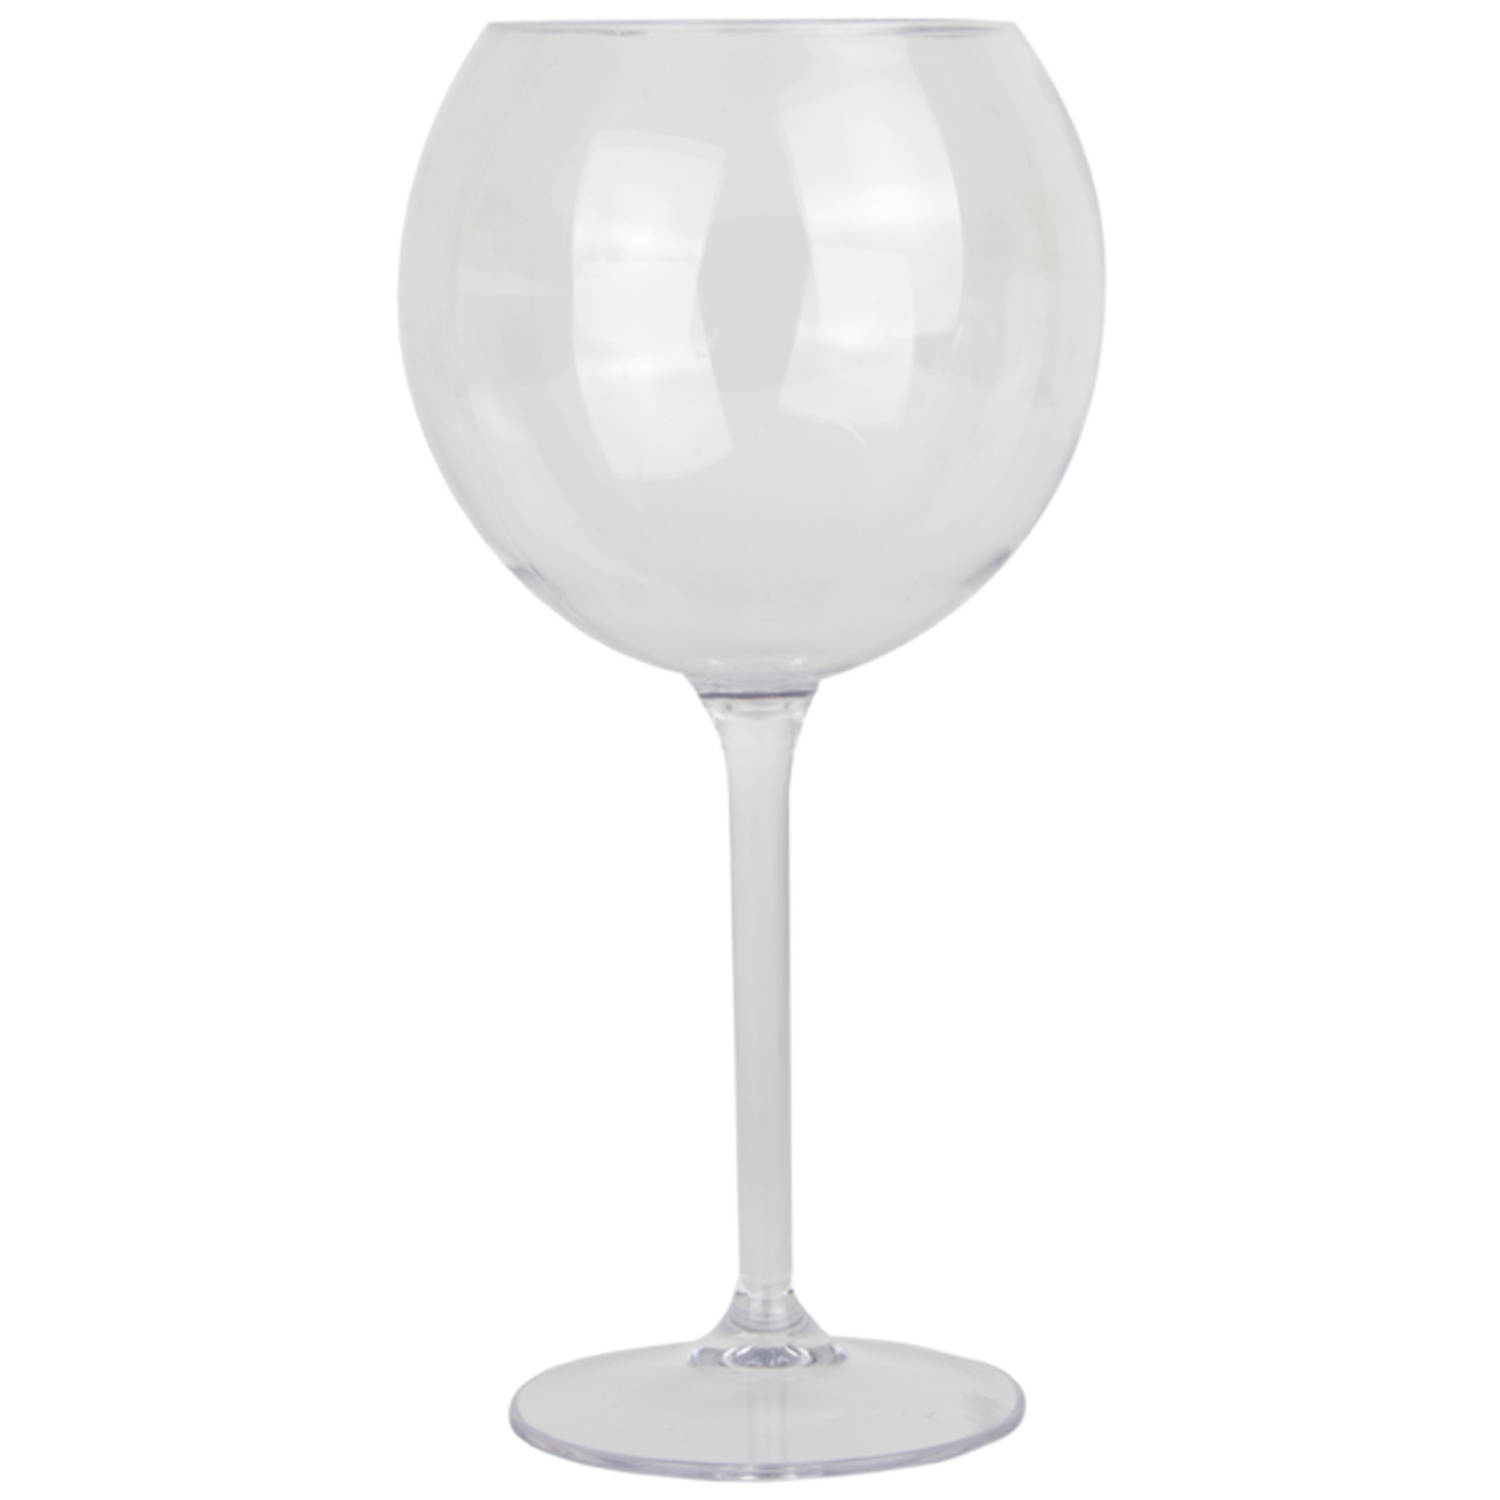 Depa Gin tonic/cocktailglas - 4x - transparant - onbreekbaar kunststof - 650 ml